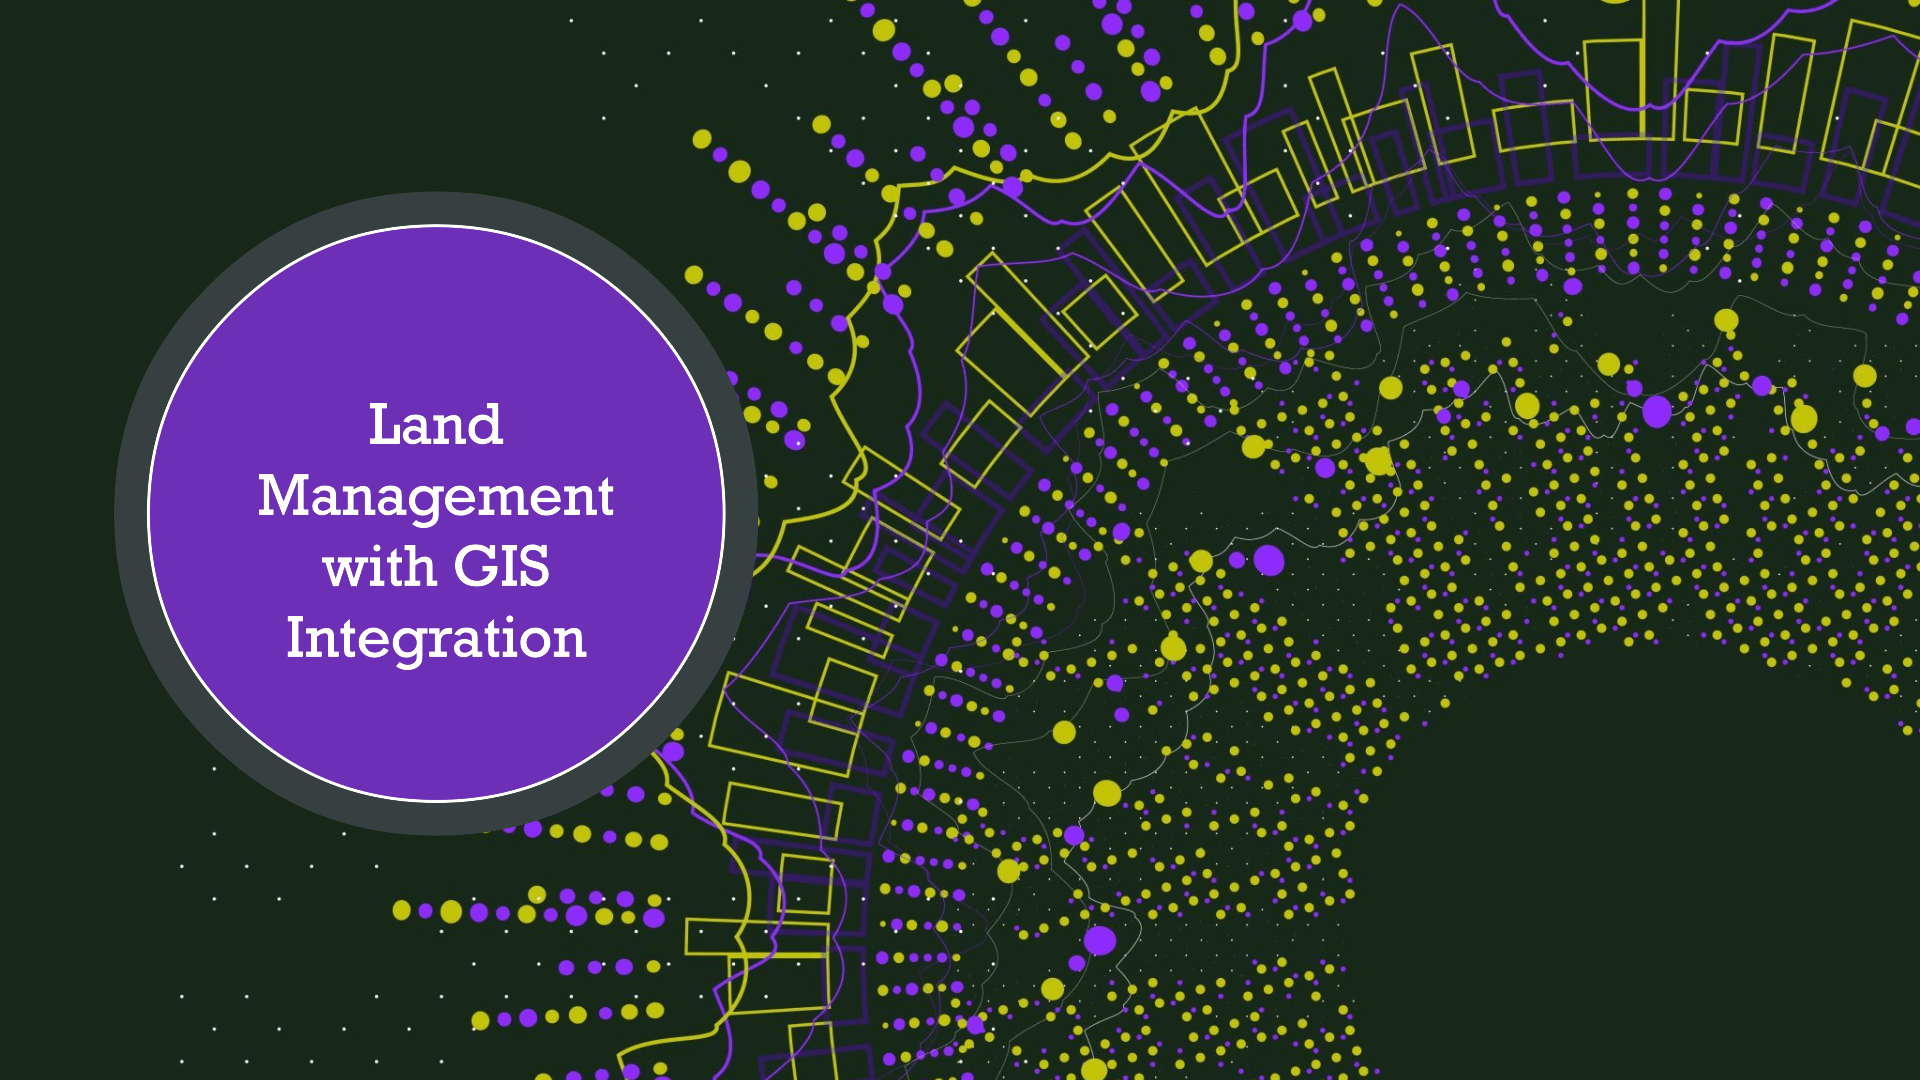 Digital Transformation and GIS Integration in land management